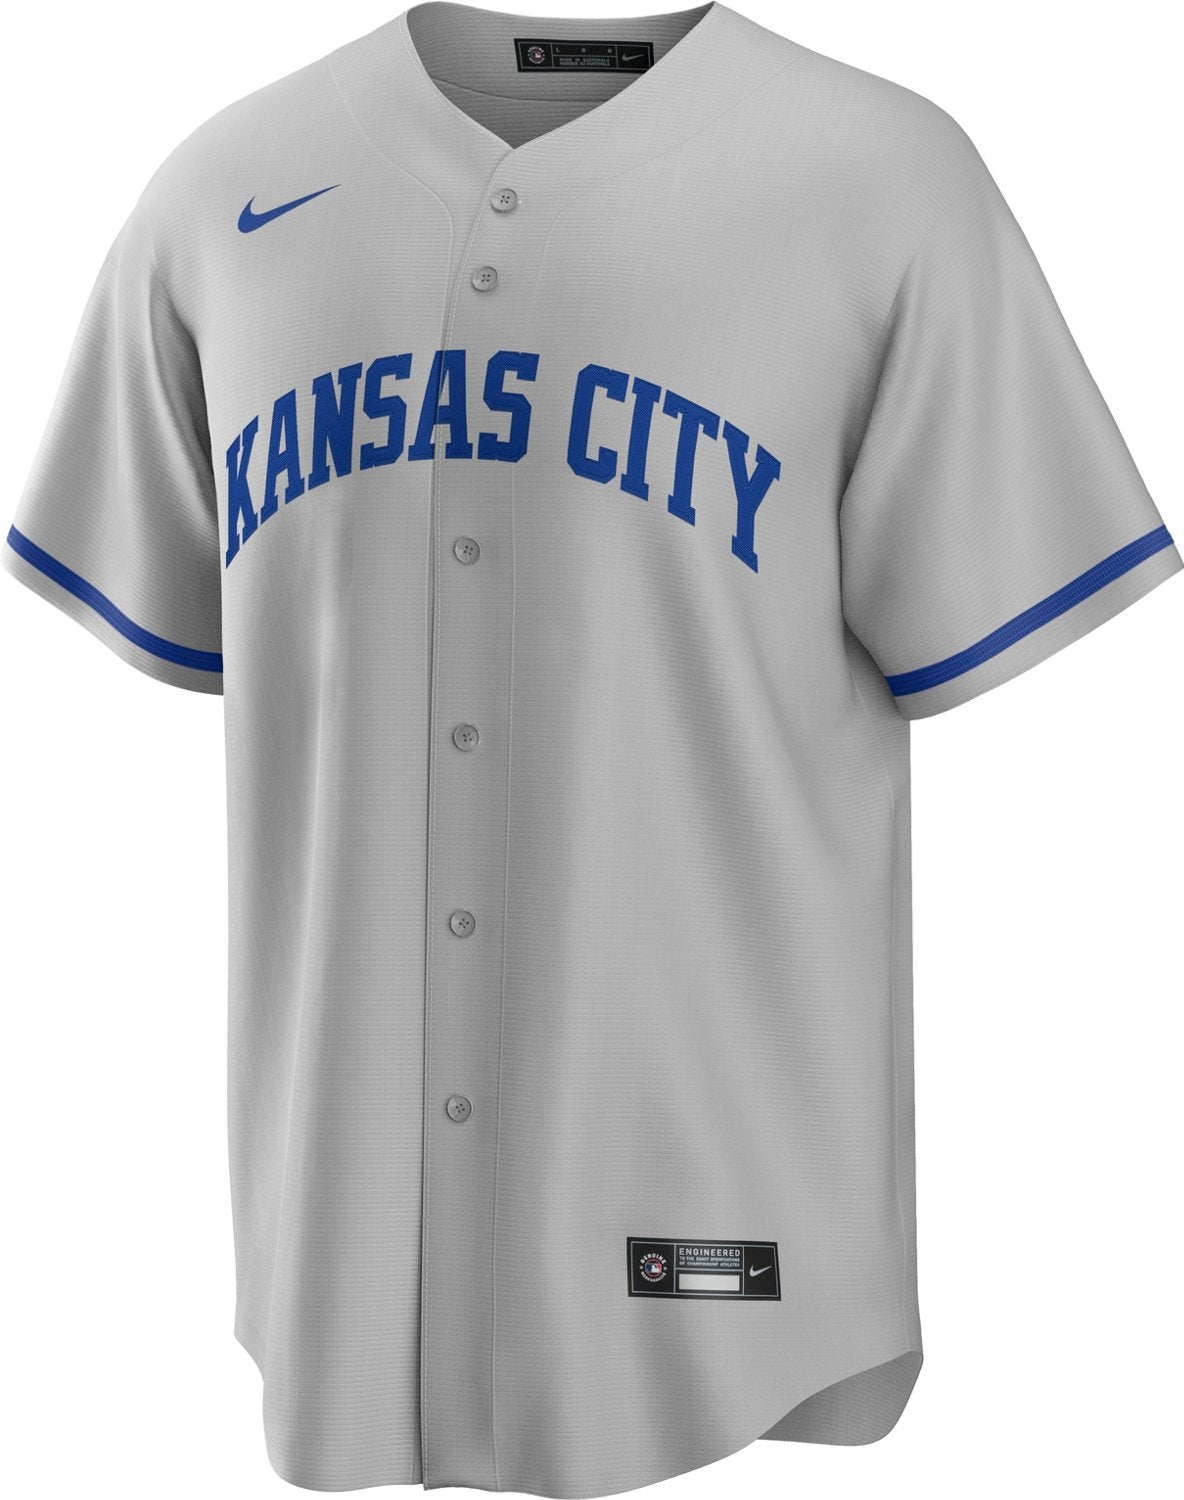 Nike Men's Kansas City Royals Replica Jersey